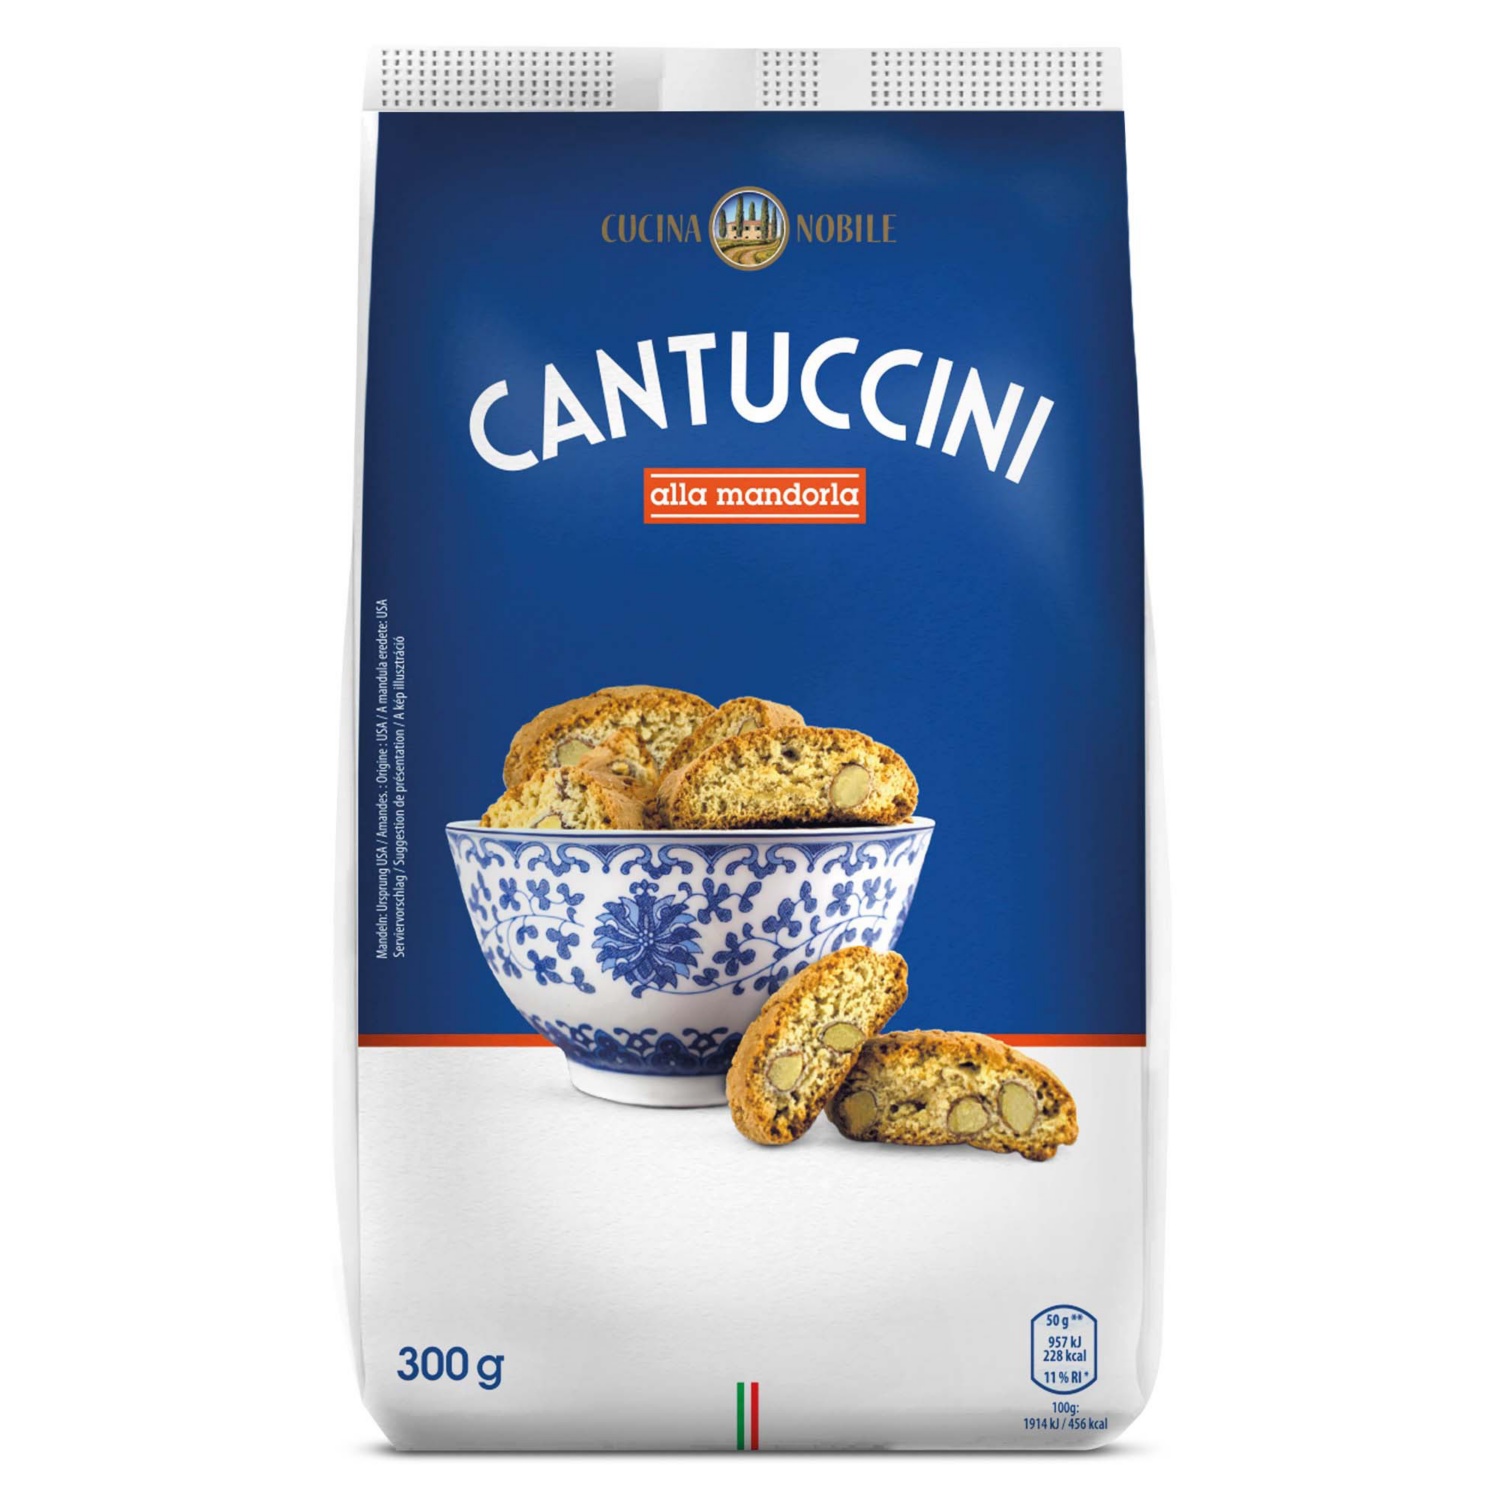 CUCINA NOBILE Cantuccini, 300 g, mandulás